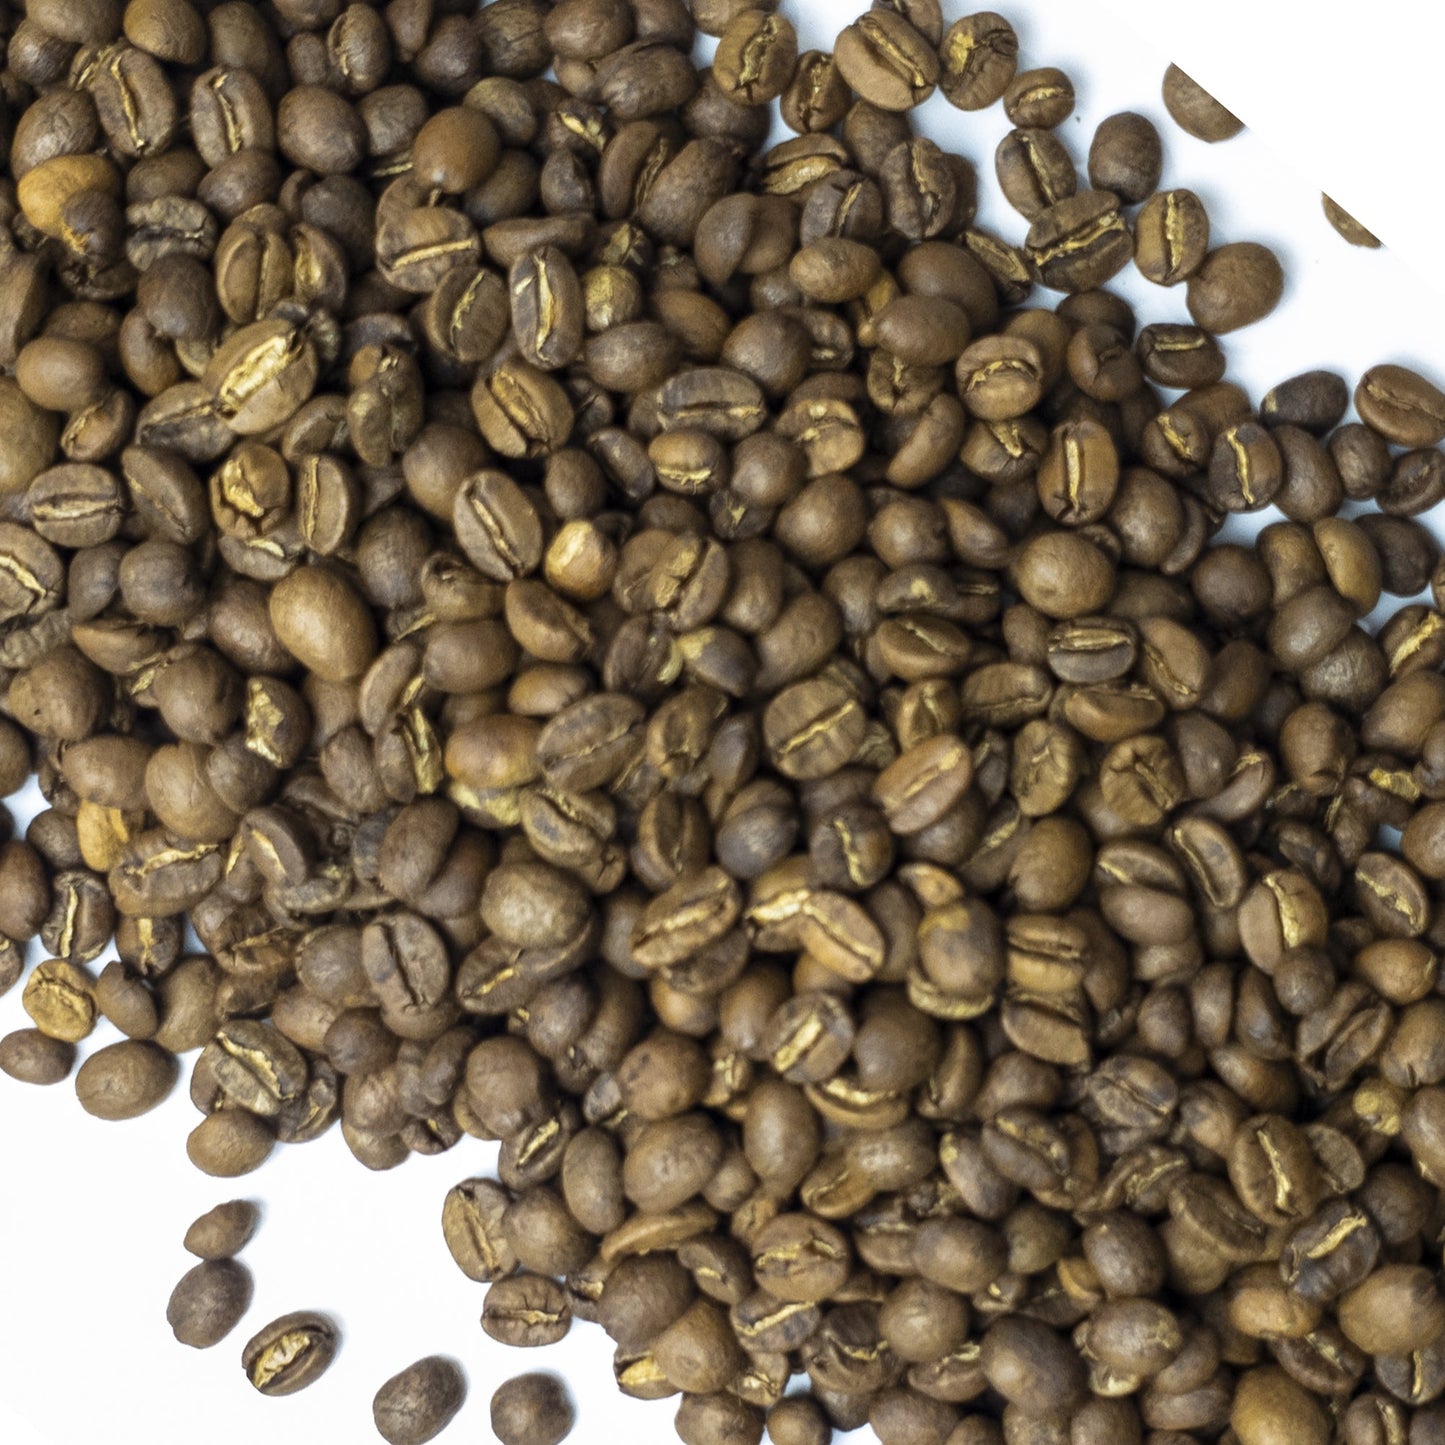 
                  
                    Red Fern | Whole Bean Coffee | Medium Roast | Rose Rock Coffee | Air Roasted | 12oz 1lb | 5lb | Sample
                  
                